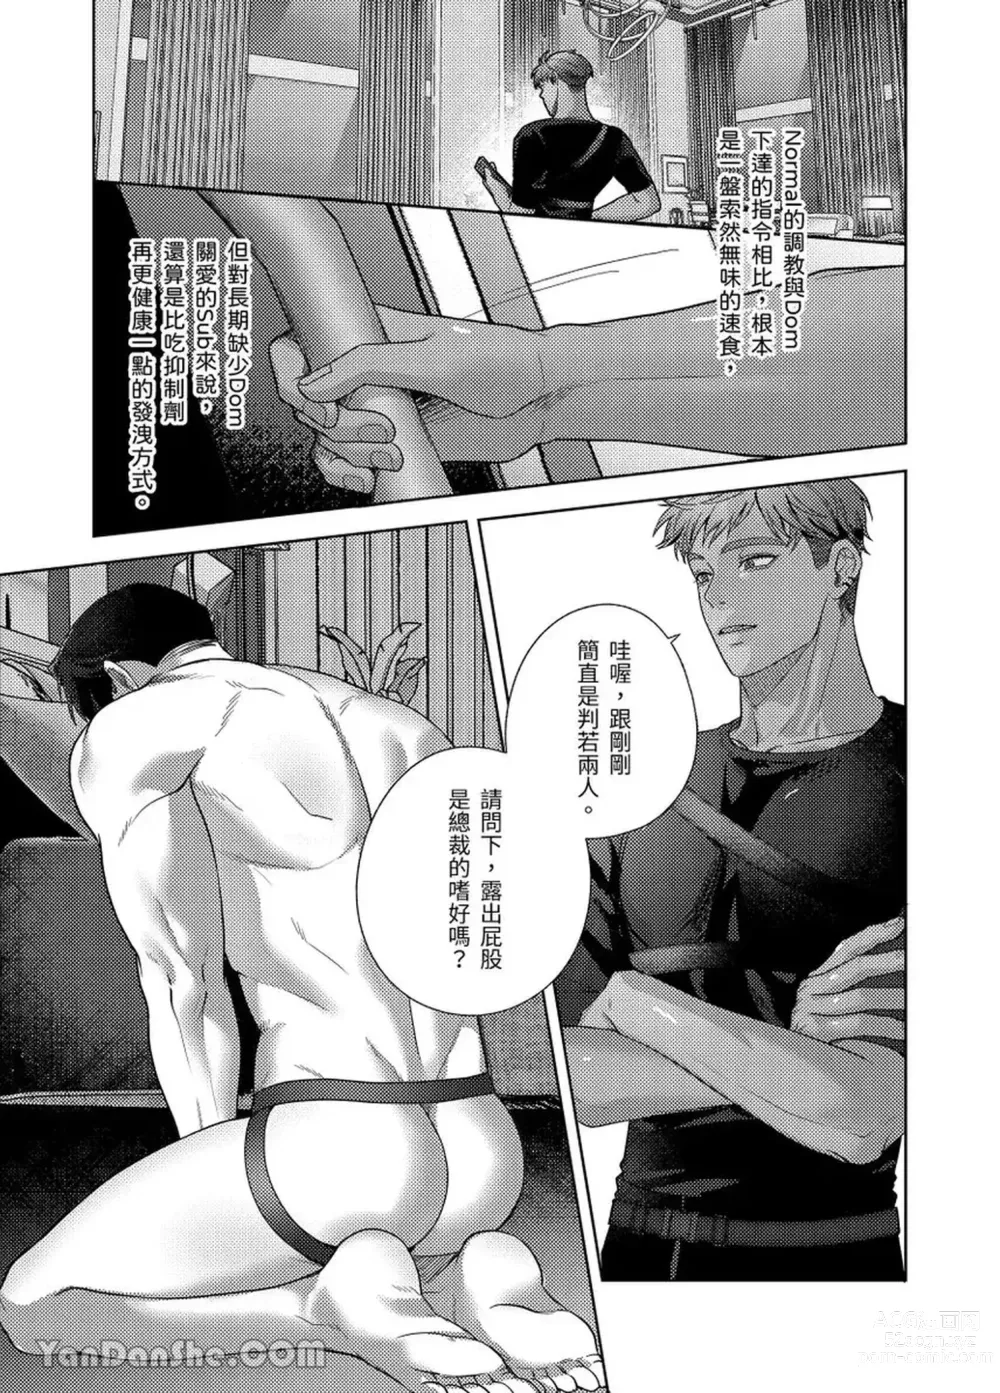 Page 14 of manga Dom&Sub